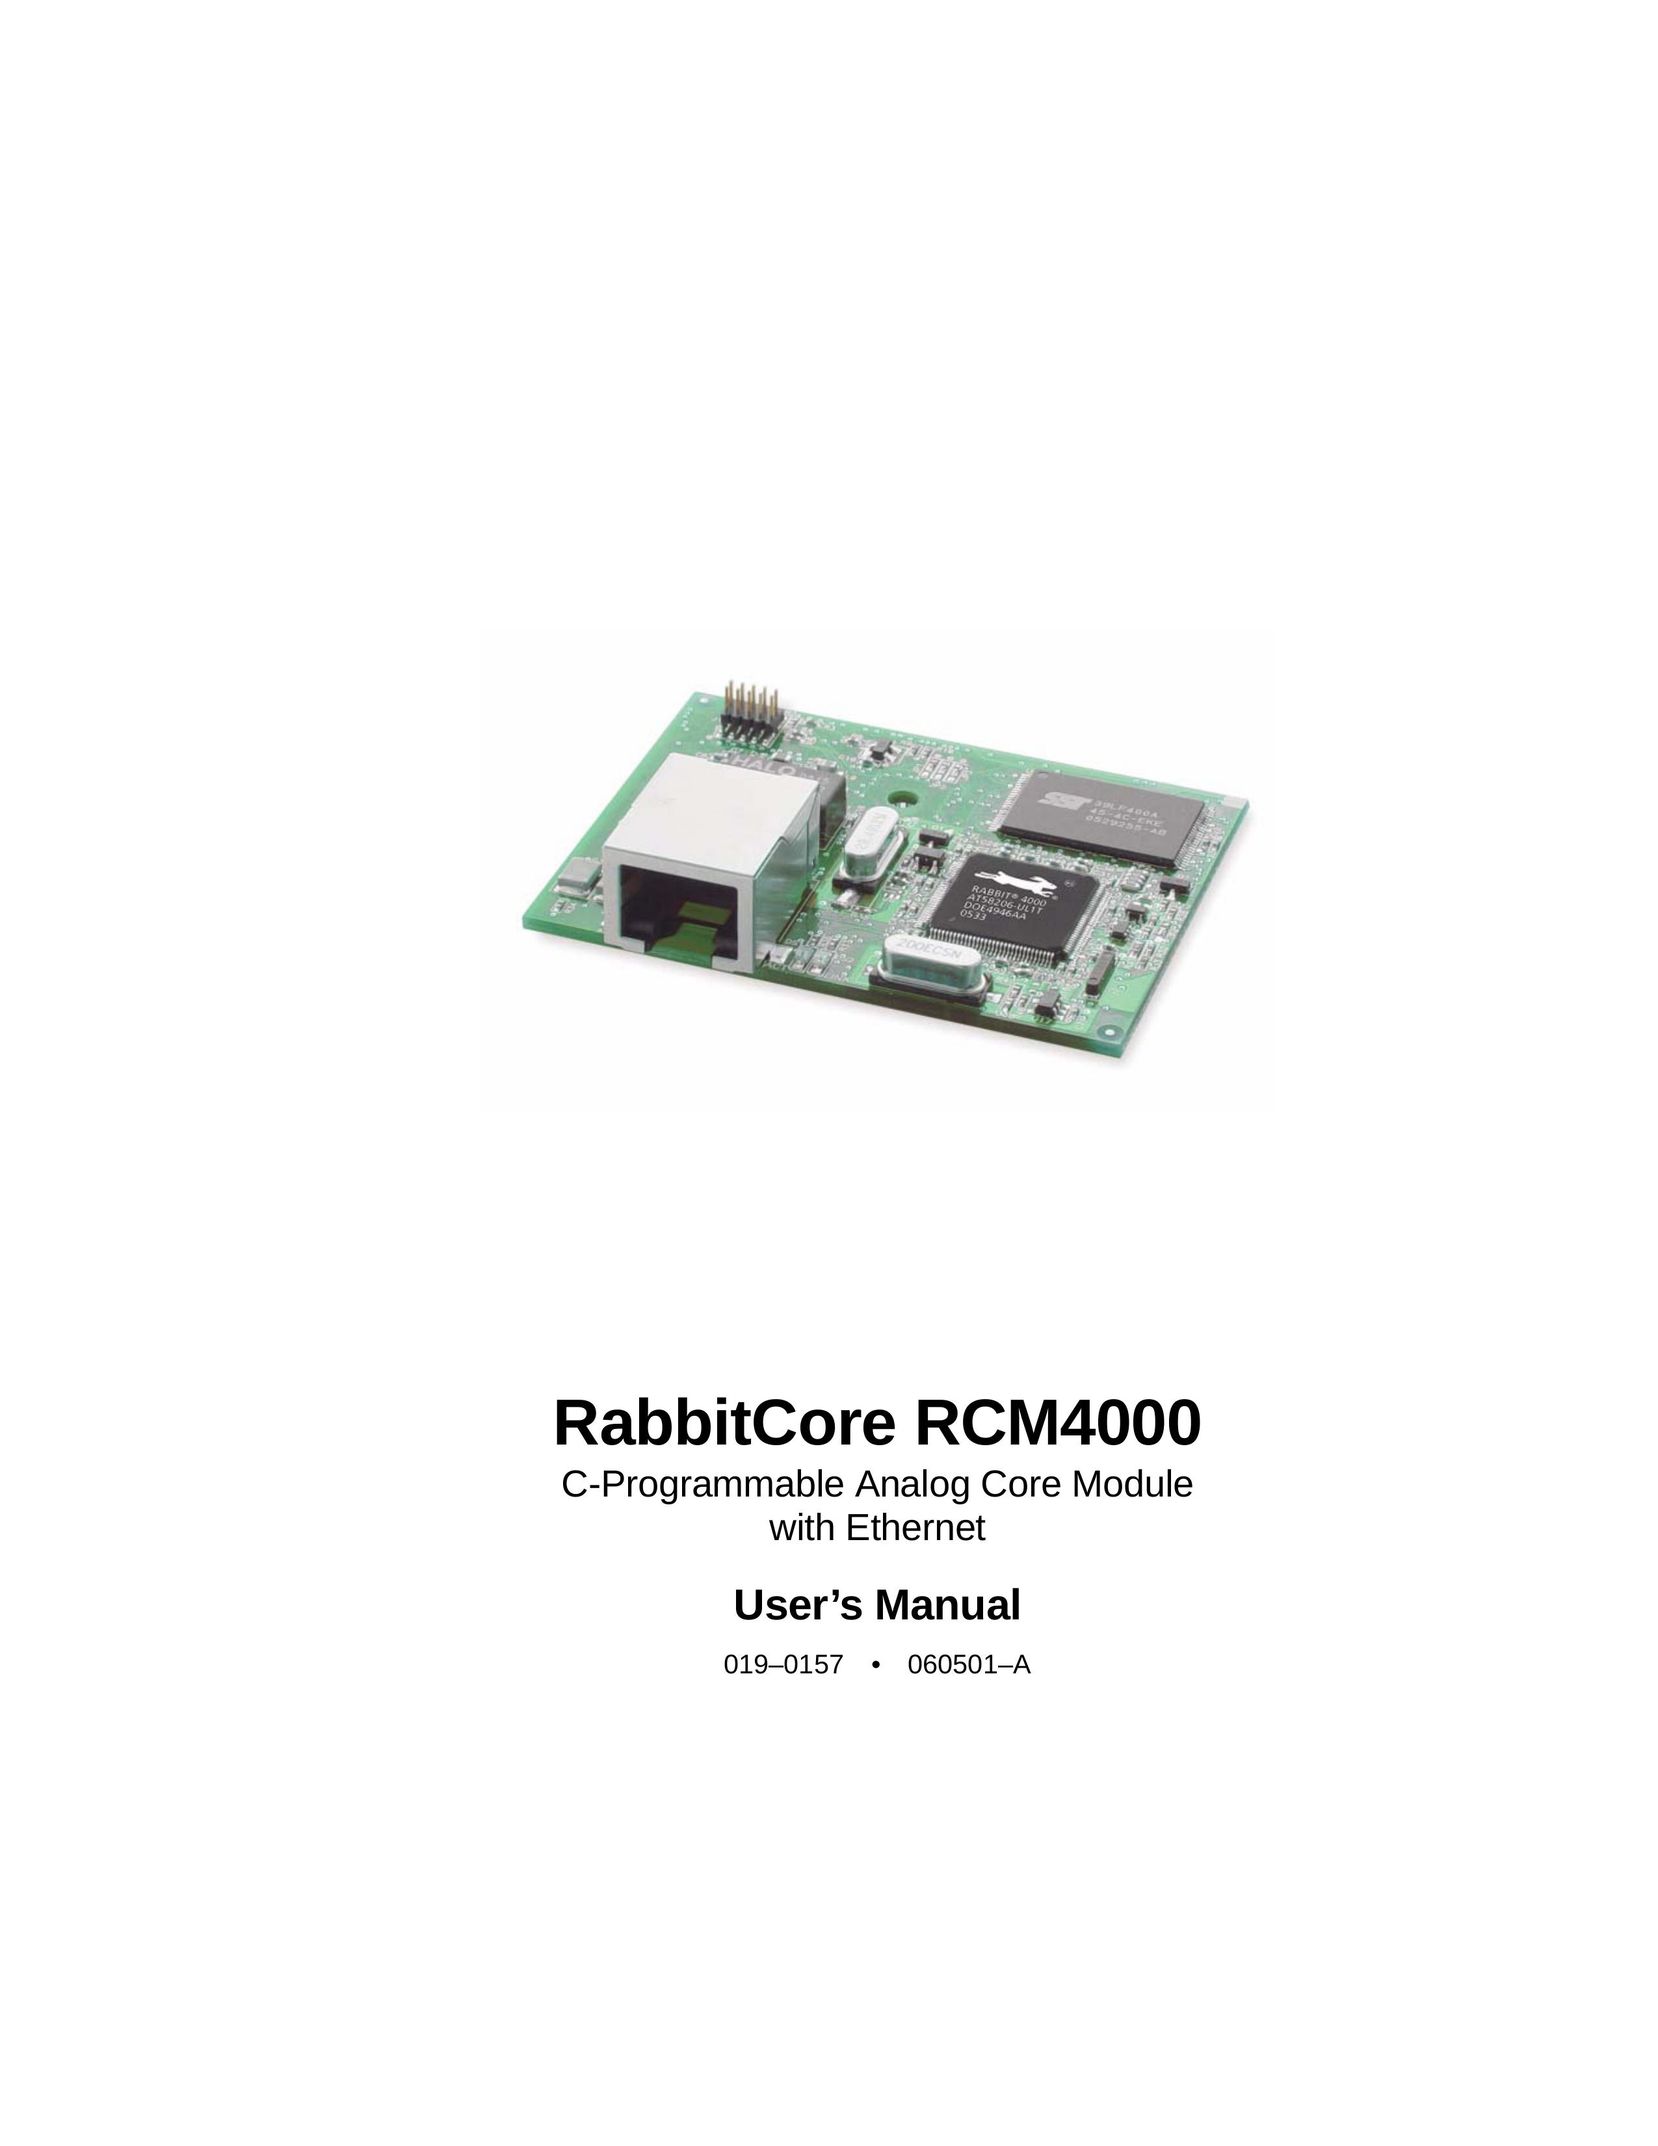 Digi RCM4000 Network Card User Manual